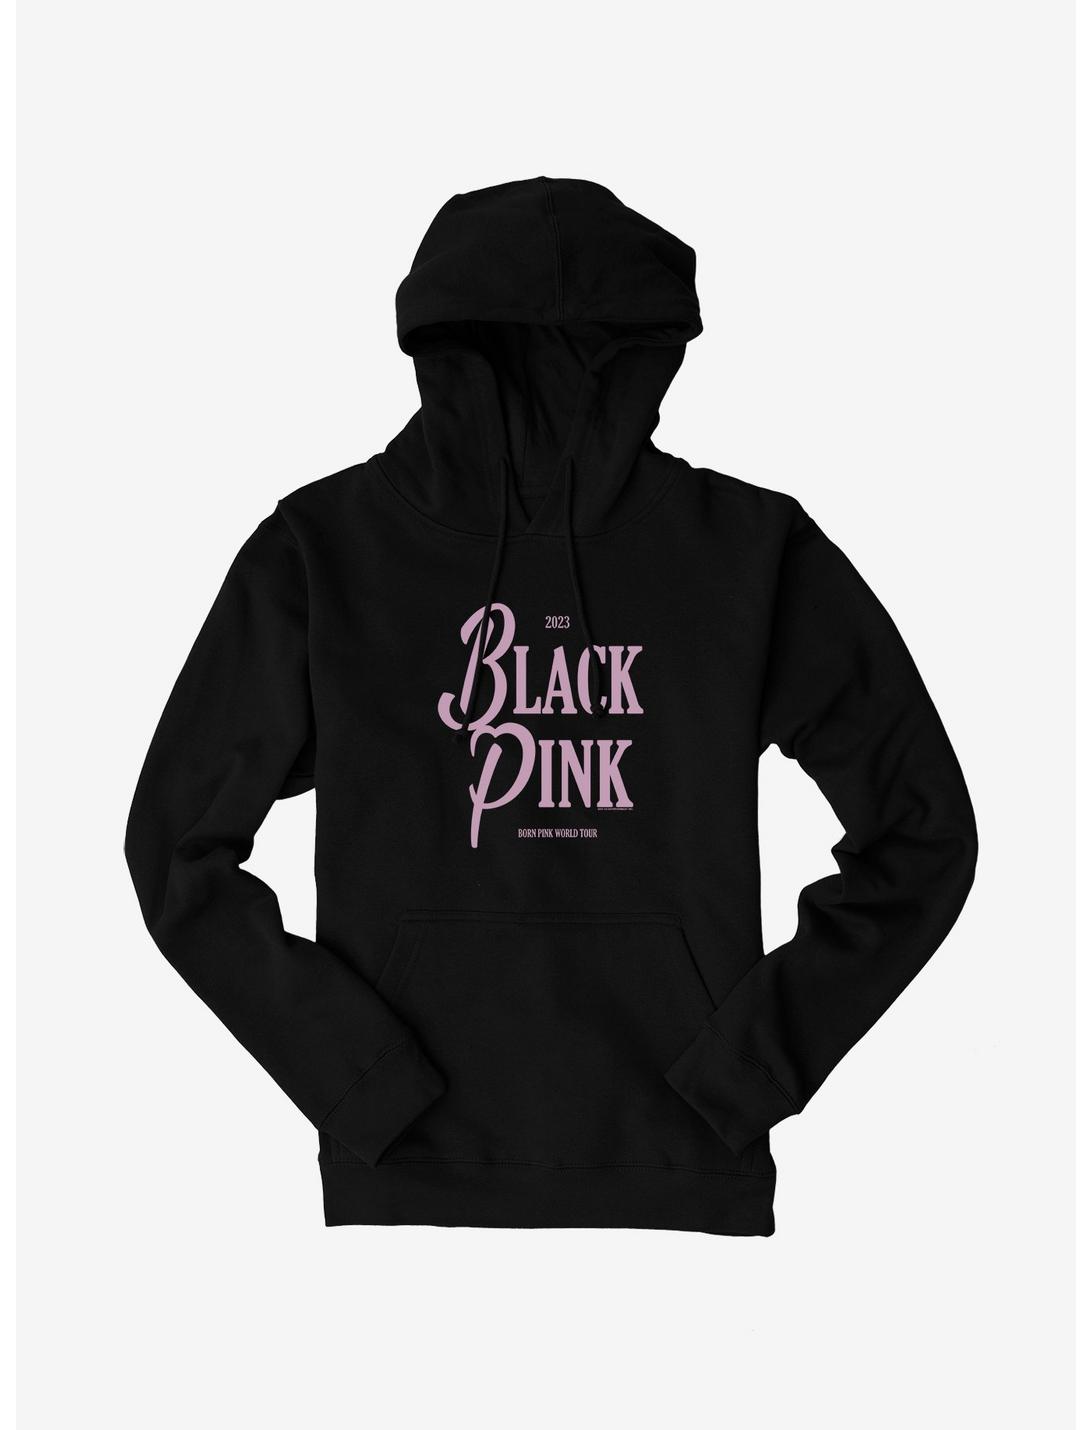 BLACKPINK 2023 Born Pink World Tour Hoodie, BLACK, hi-res